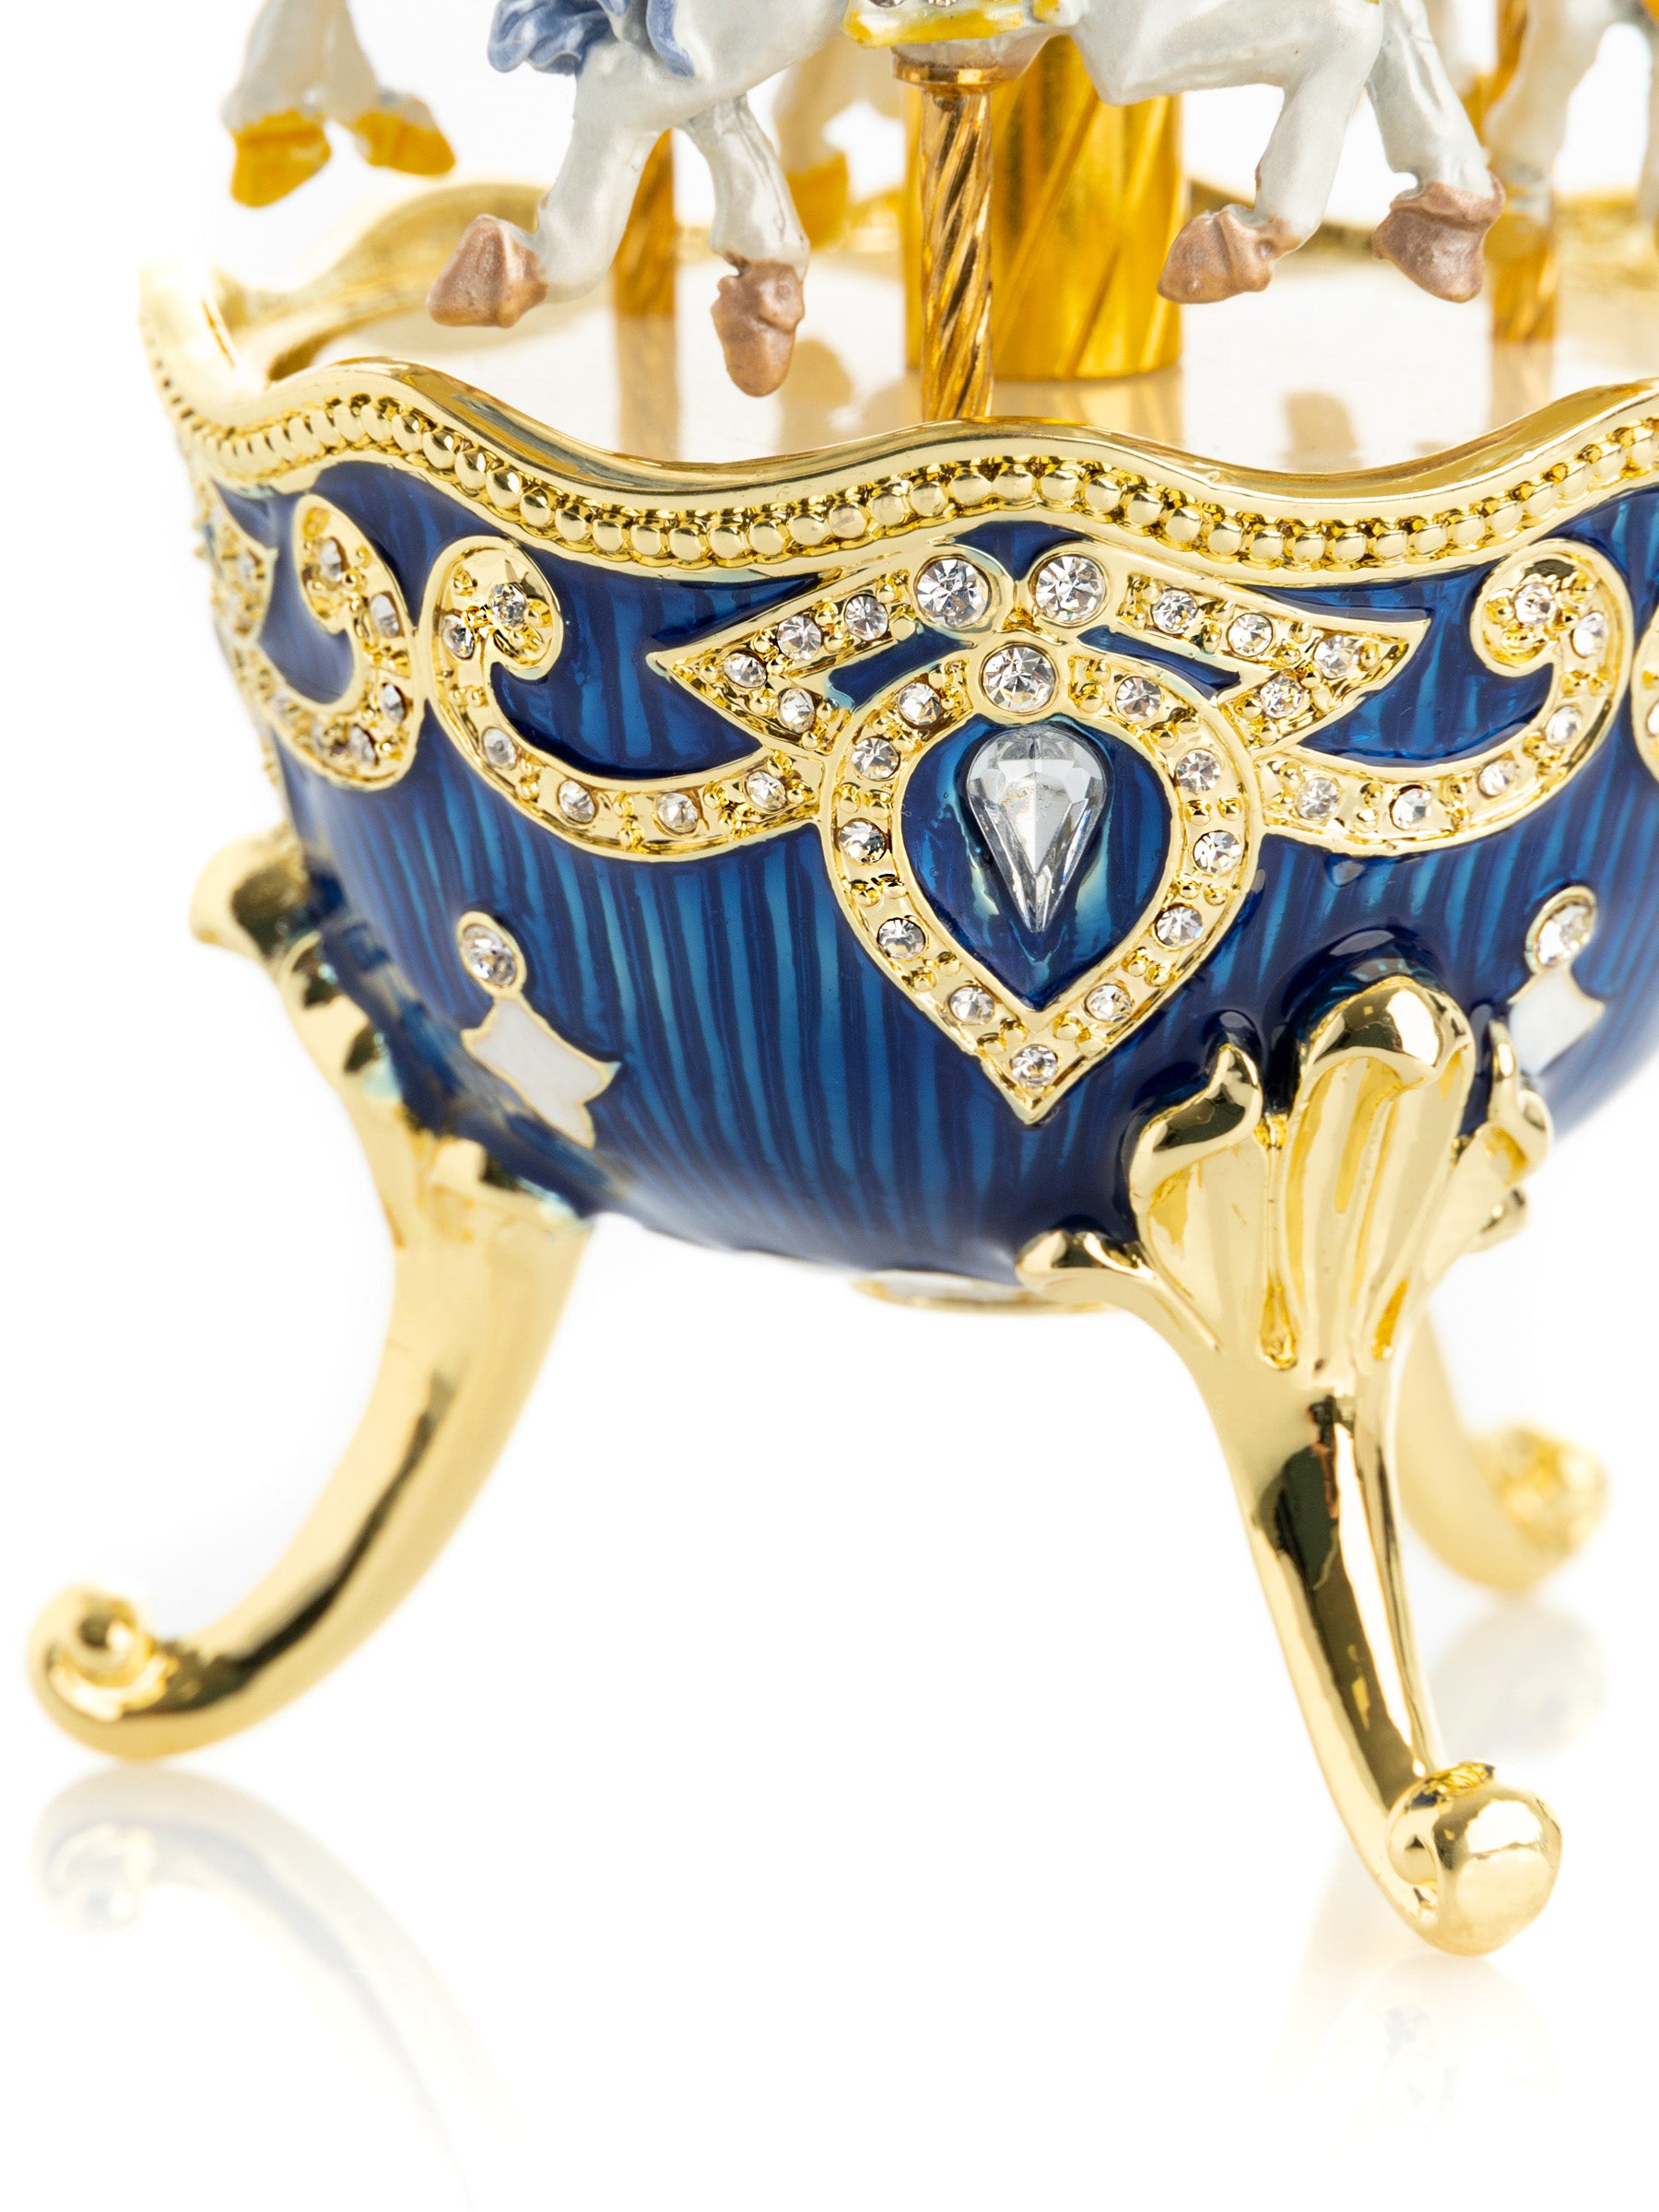 Blue Wind up Horse Carousel Faberge Egg